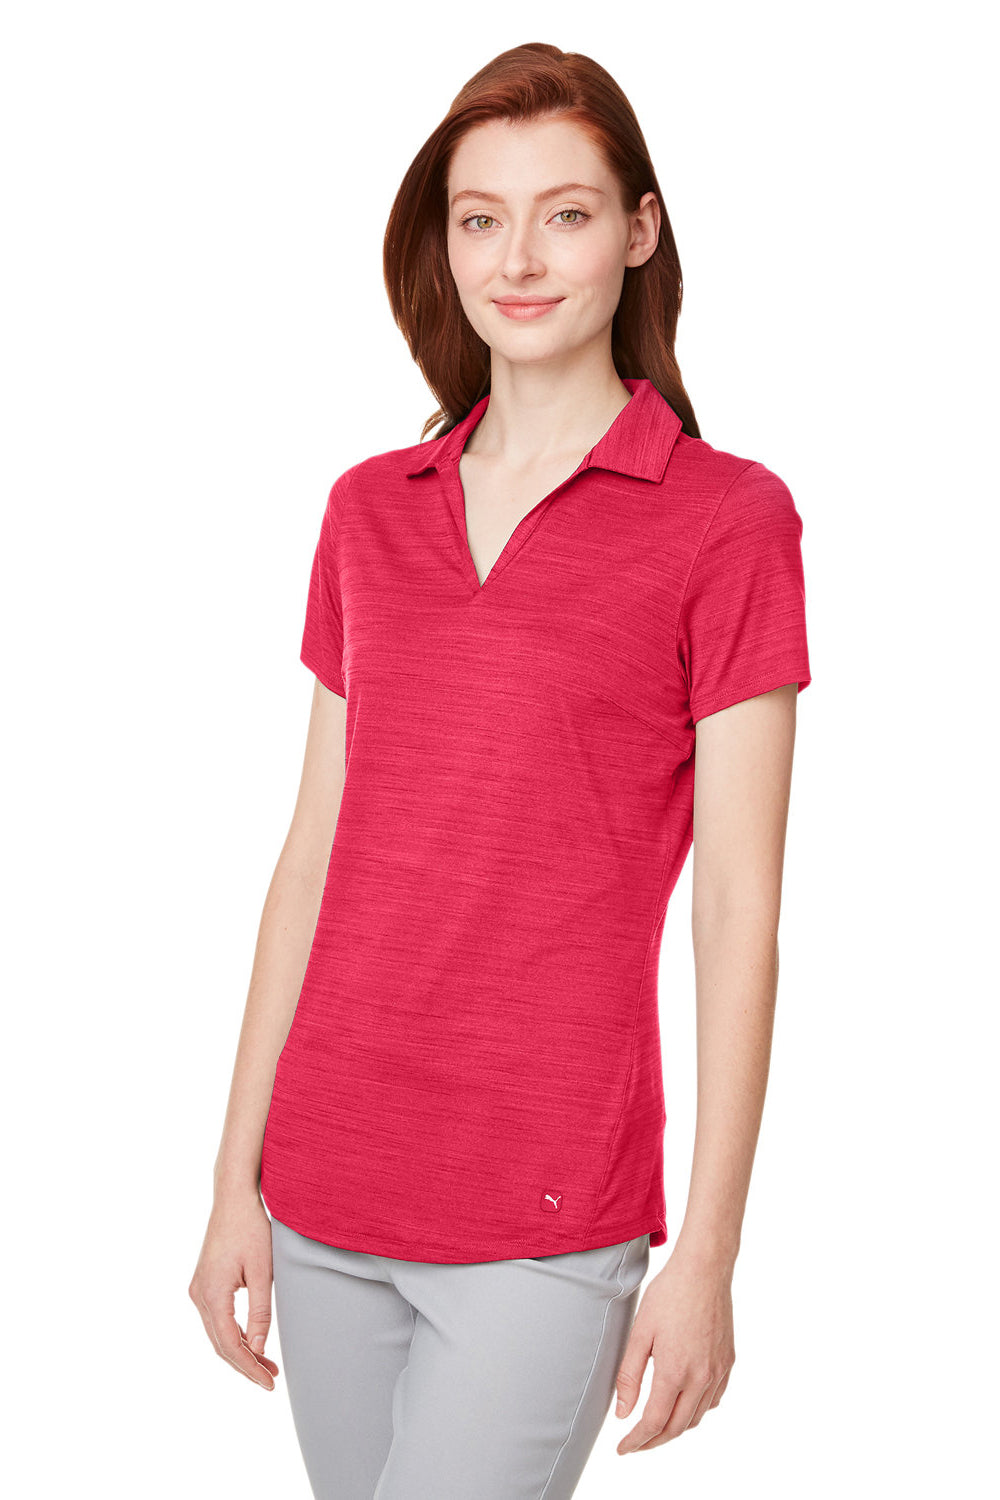 Puma 597695 Womens Cloudspun Free Short Sleeve Polo Shirt Heather Teaberry Red 3Q